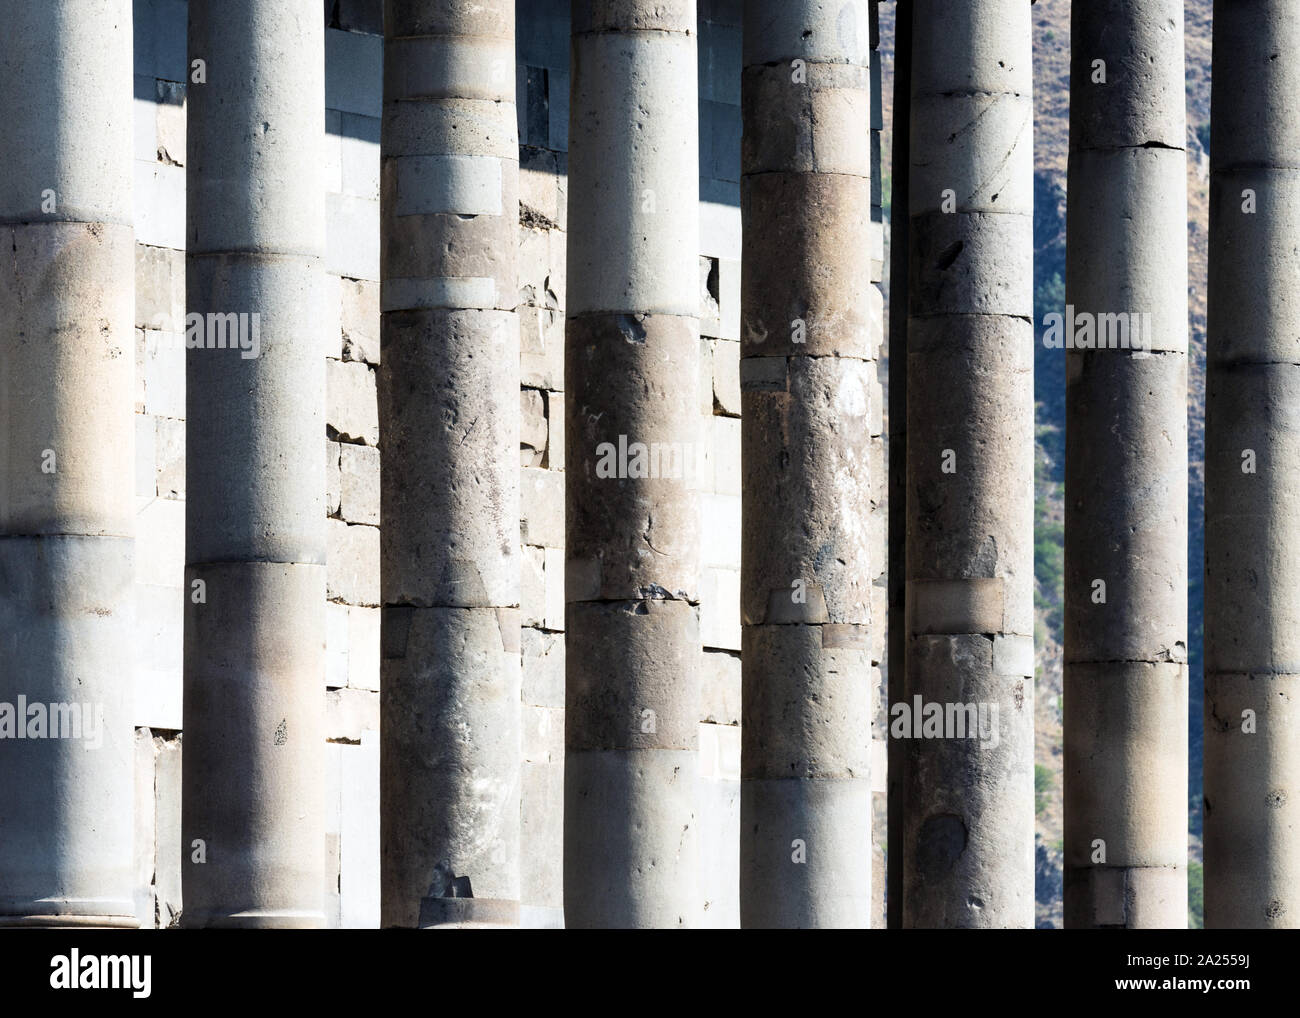 Temple of Garni columns, Armenia Stock Photo